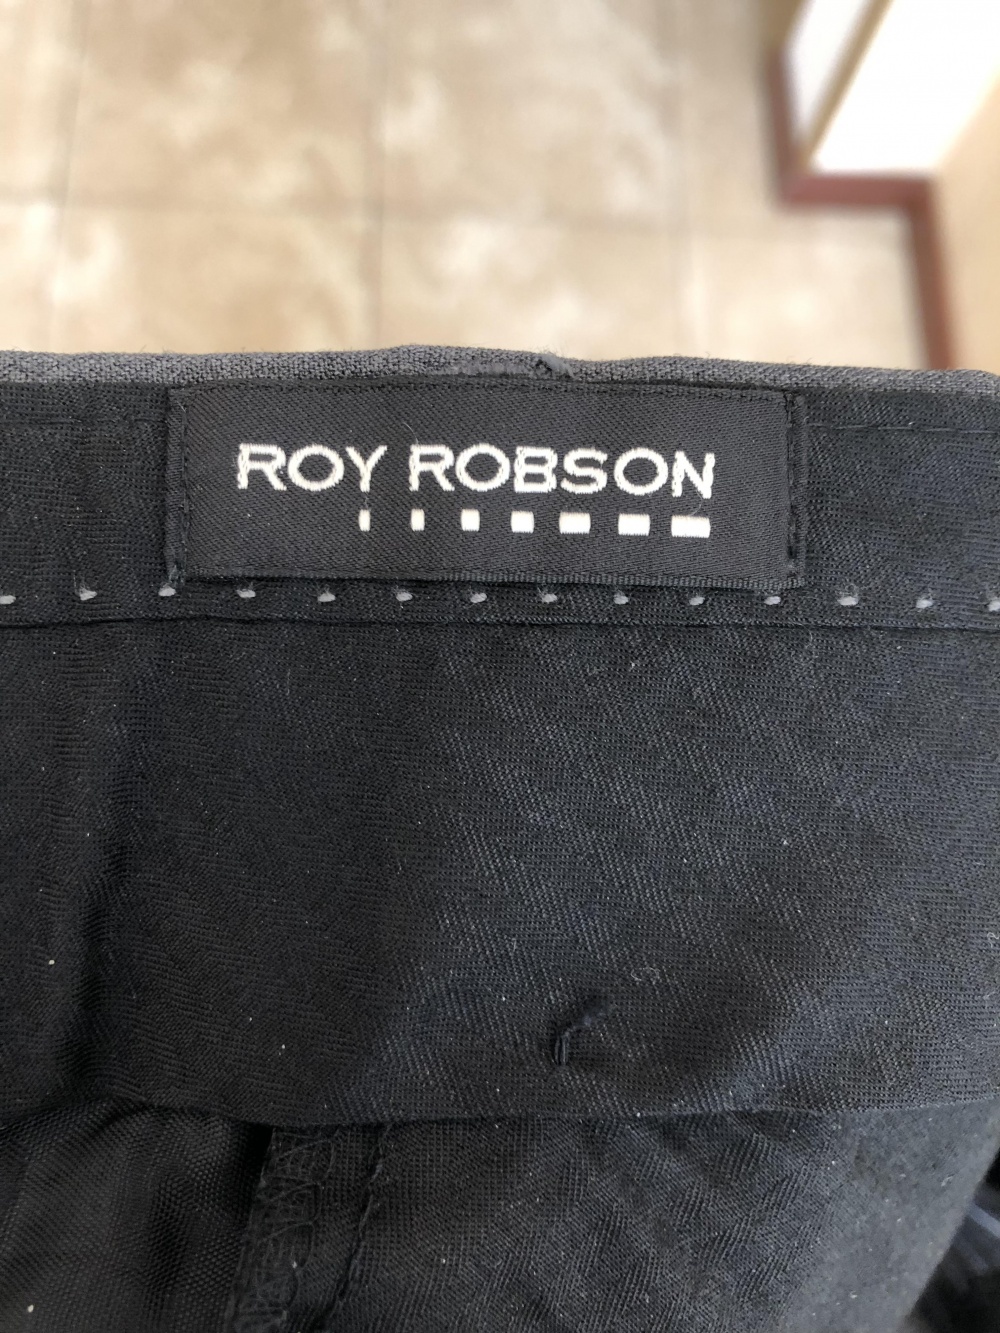 Roy robson купить